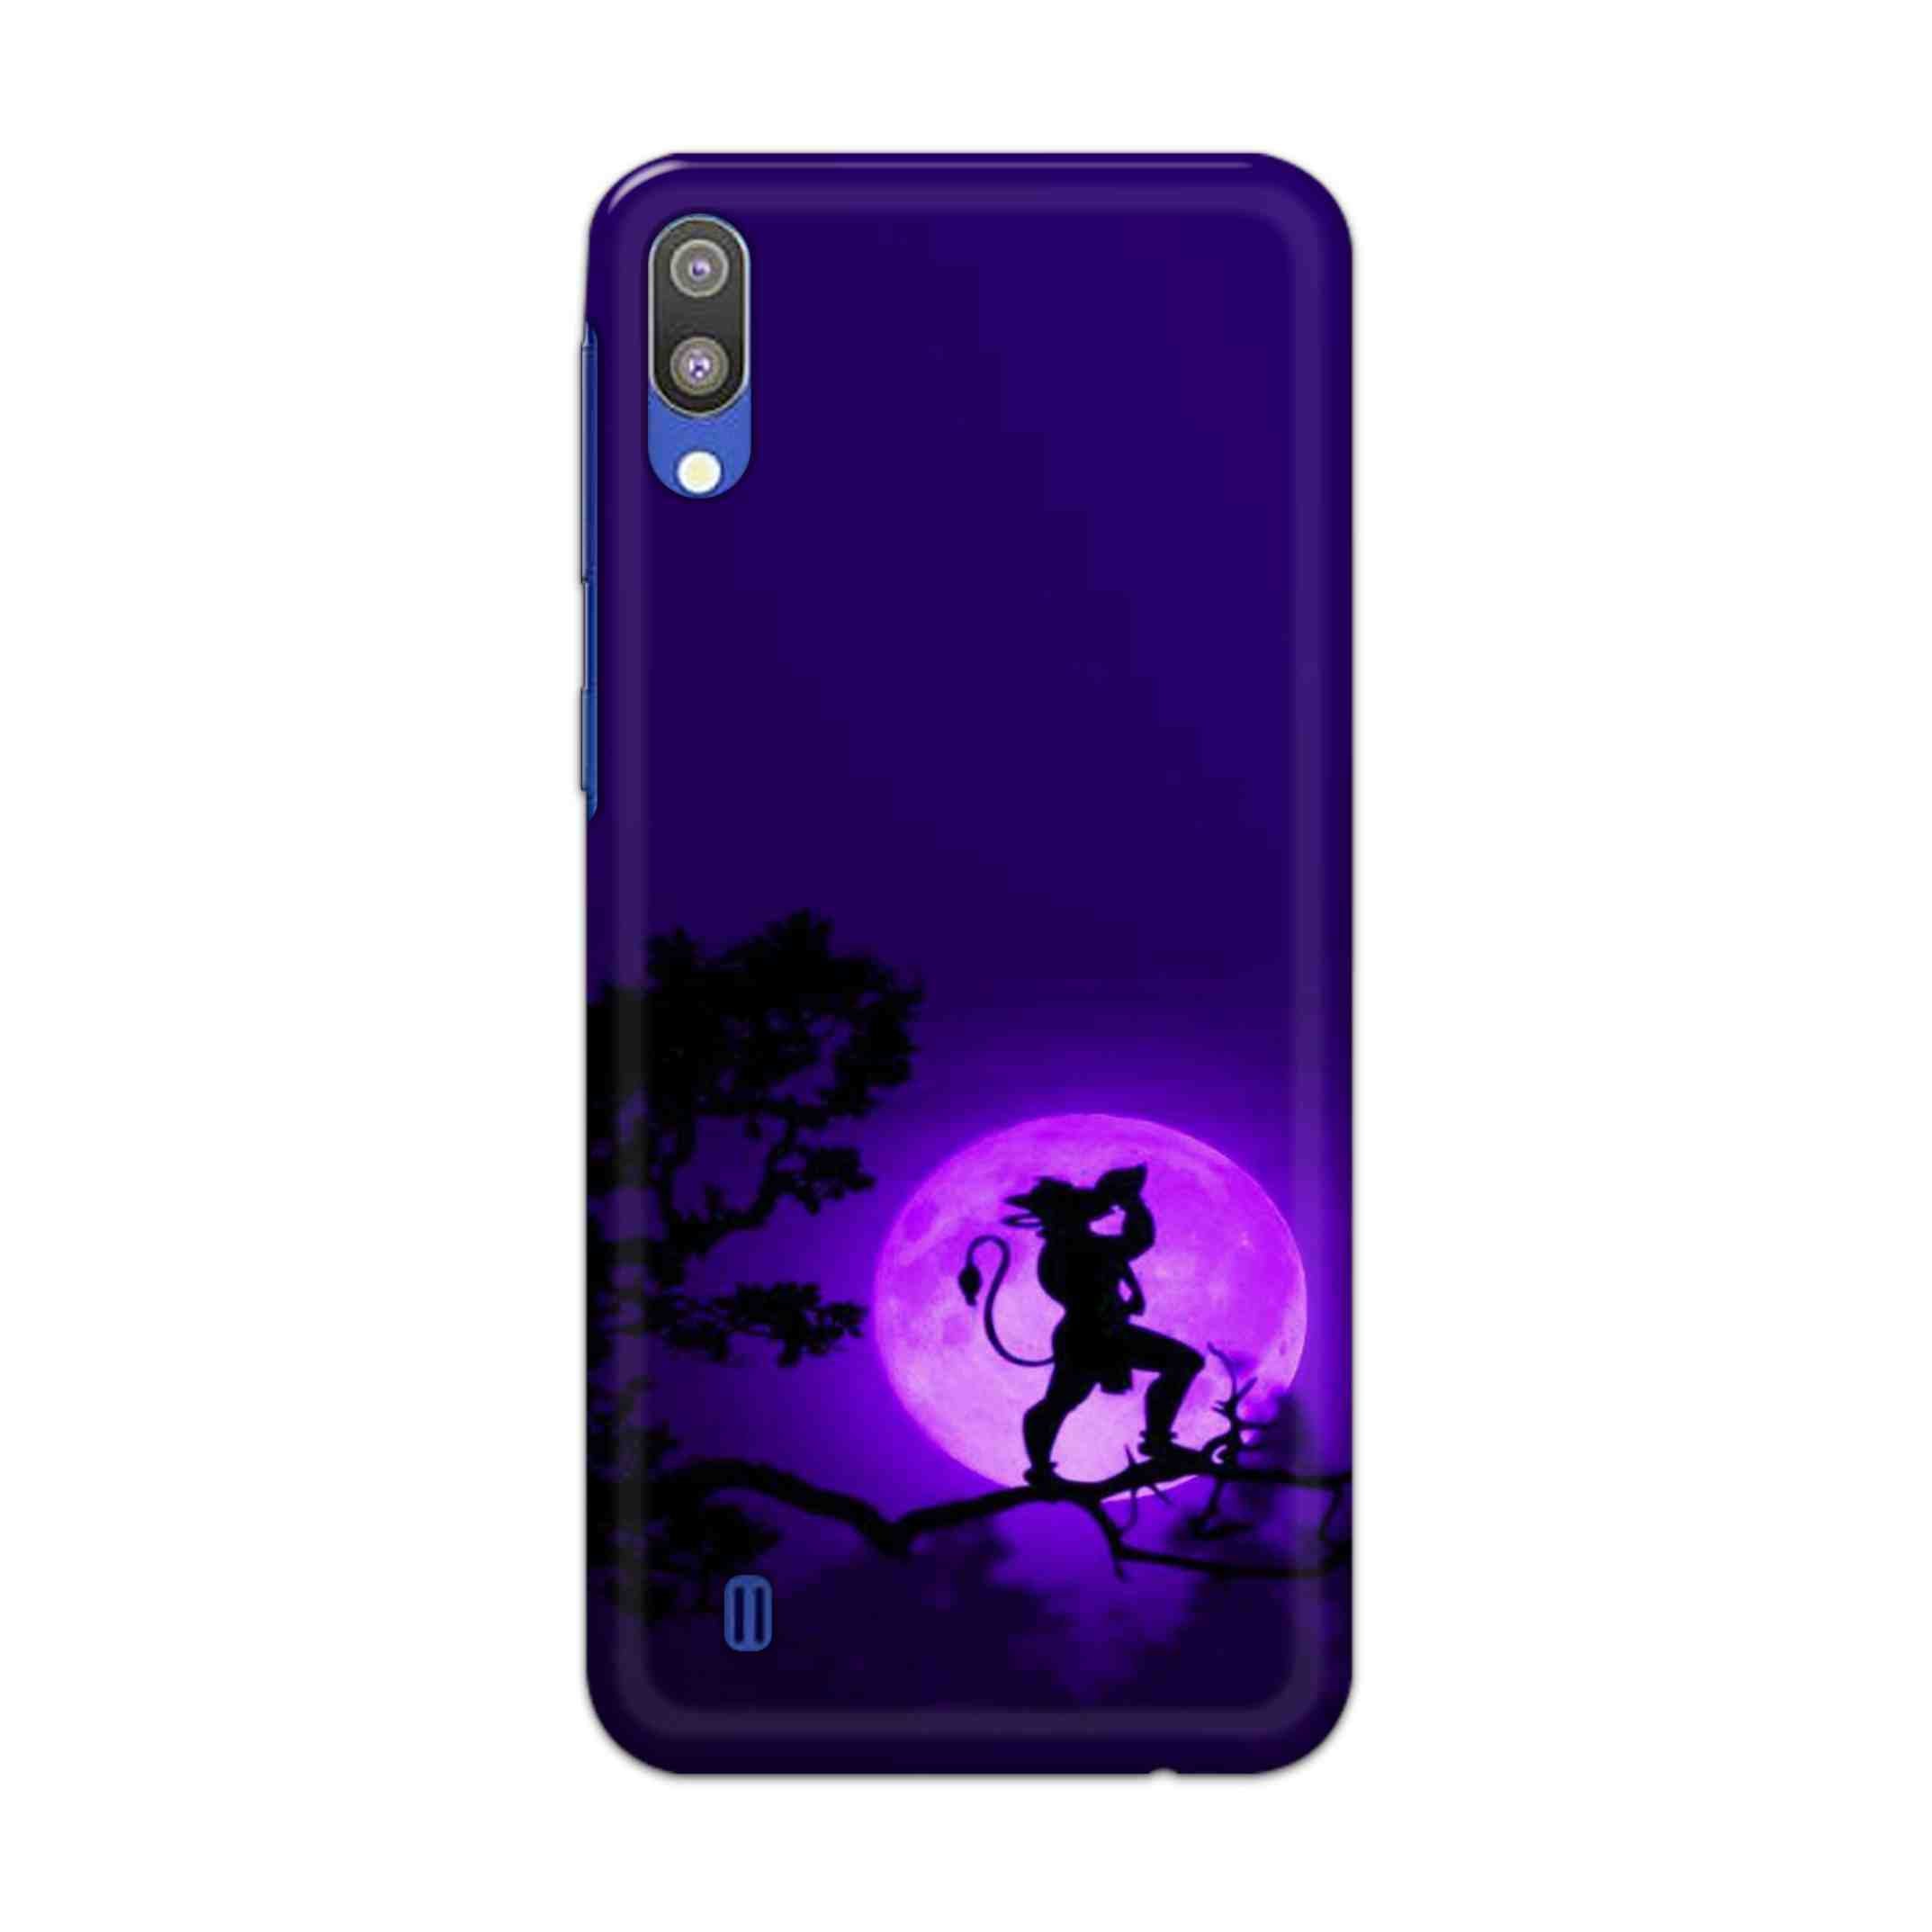 Buy Hanuman Hard Back Mobile Phone Case Cover For Samsung Galaxy M10 Online